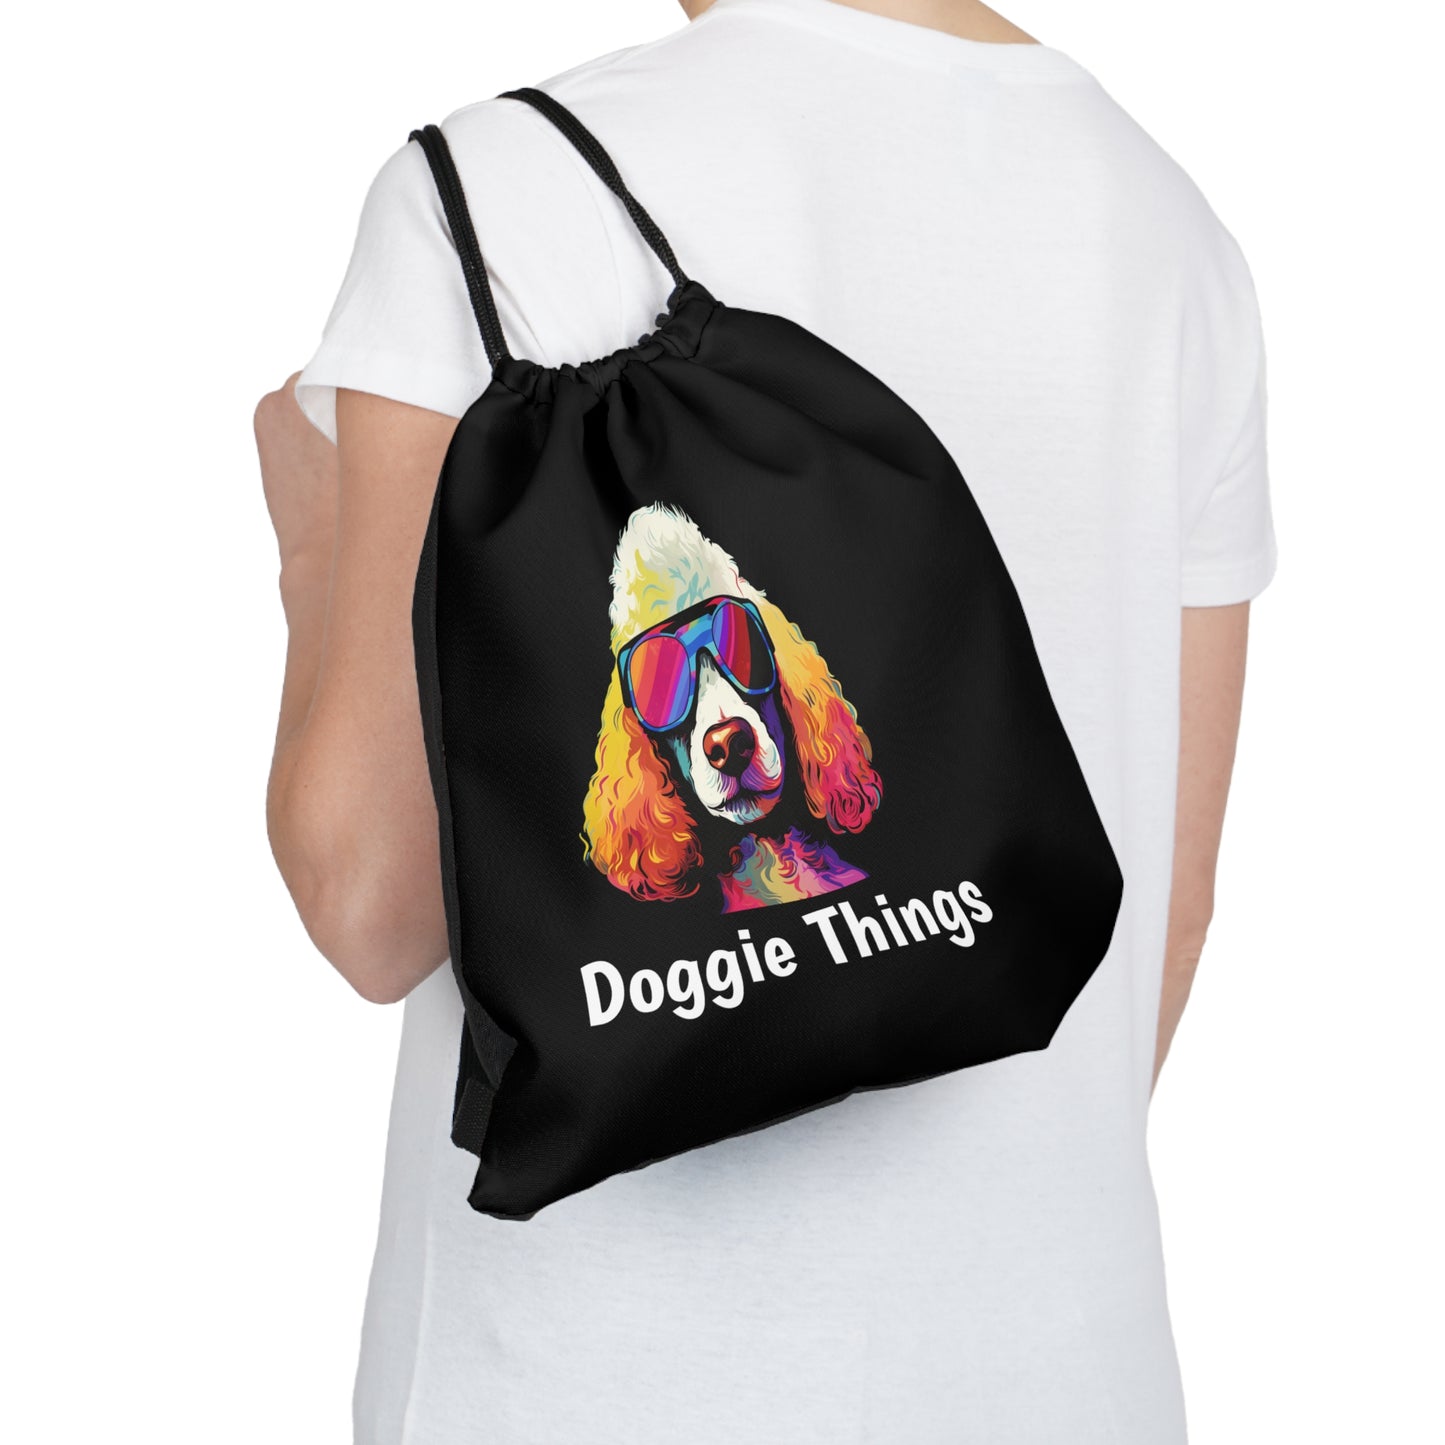 Poodle Doggie Things Outdoor Black Drawstring Bag